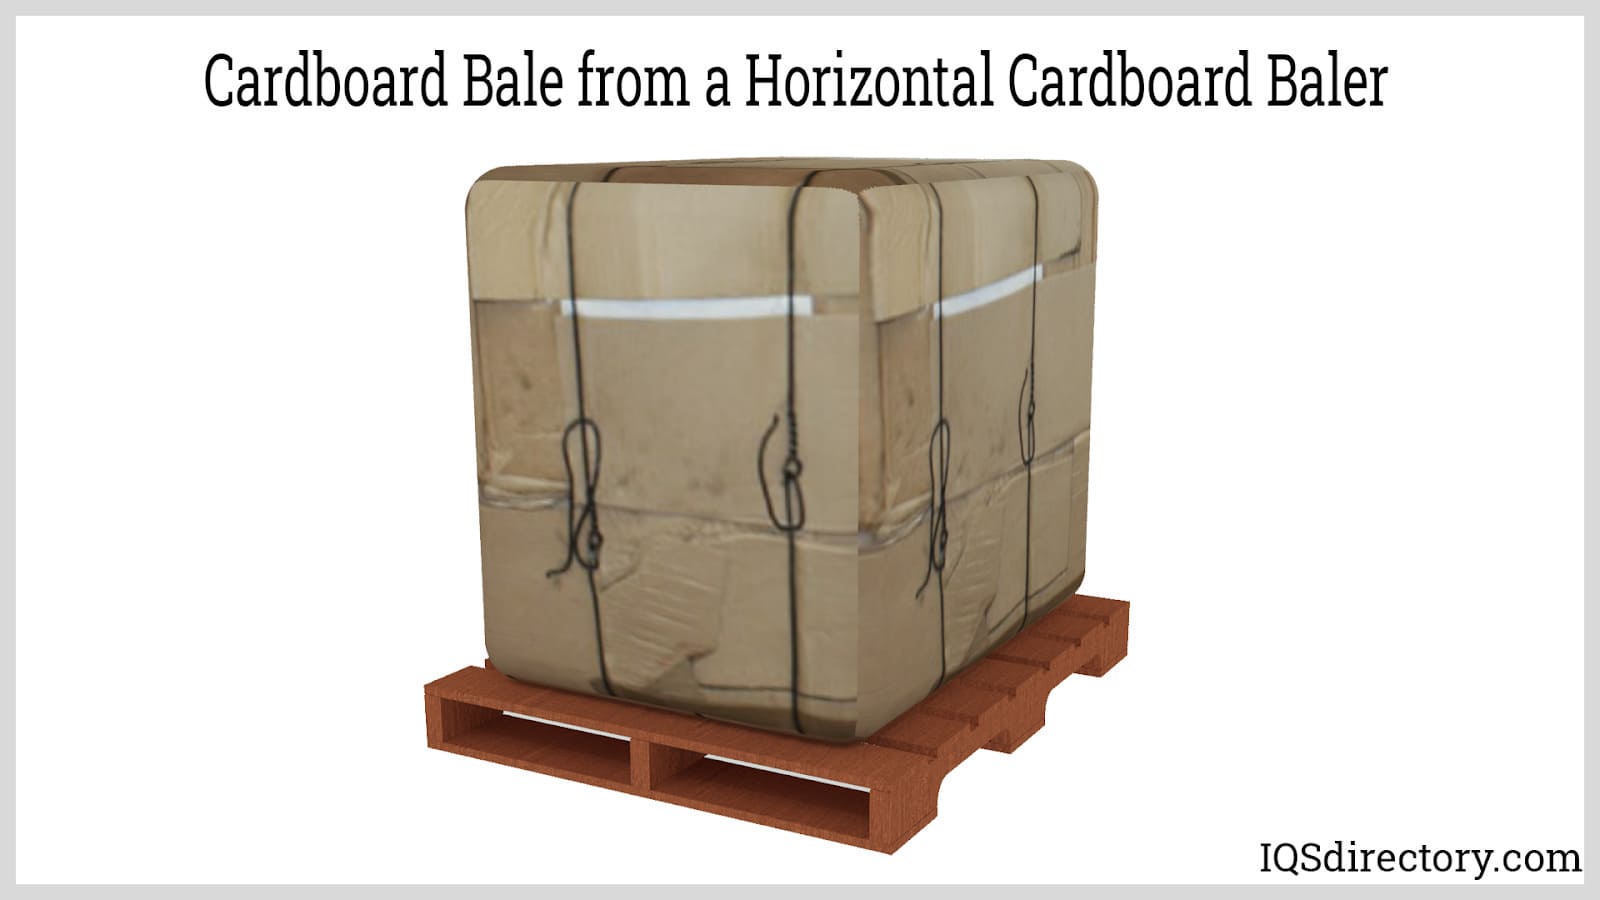 Cardboard Bale from a Horizontal Cardboard Baler